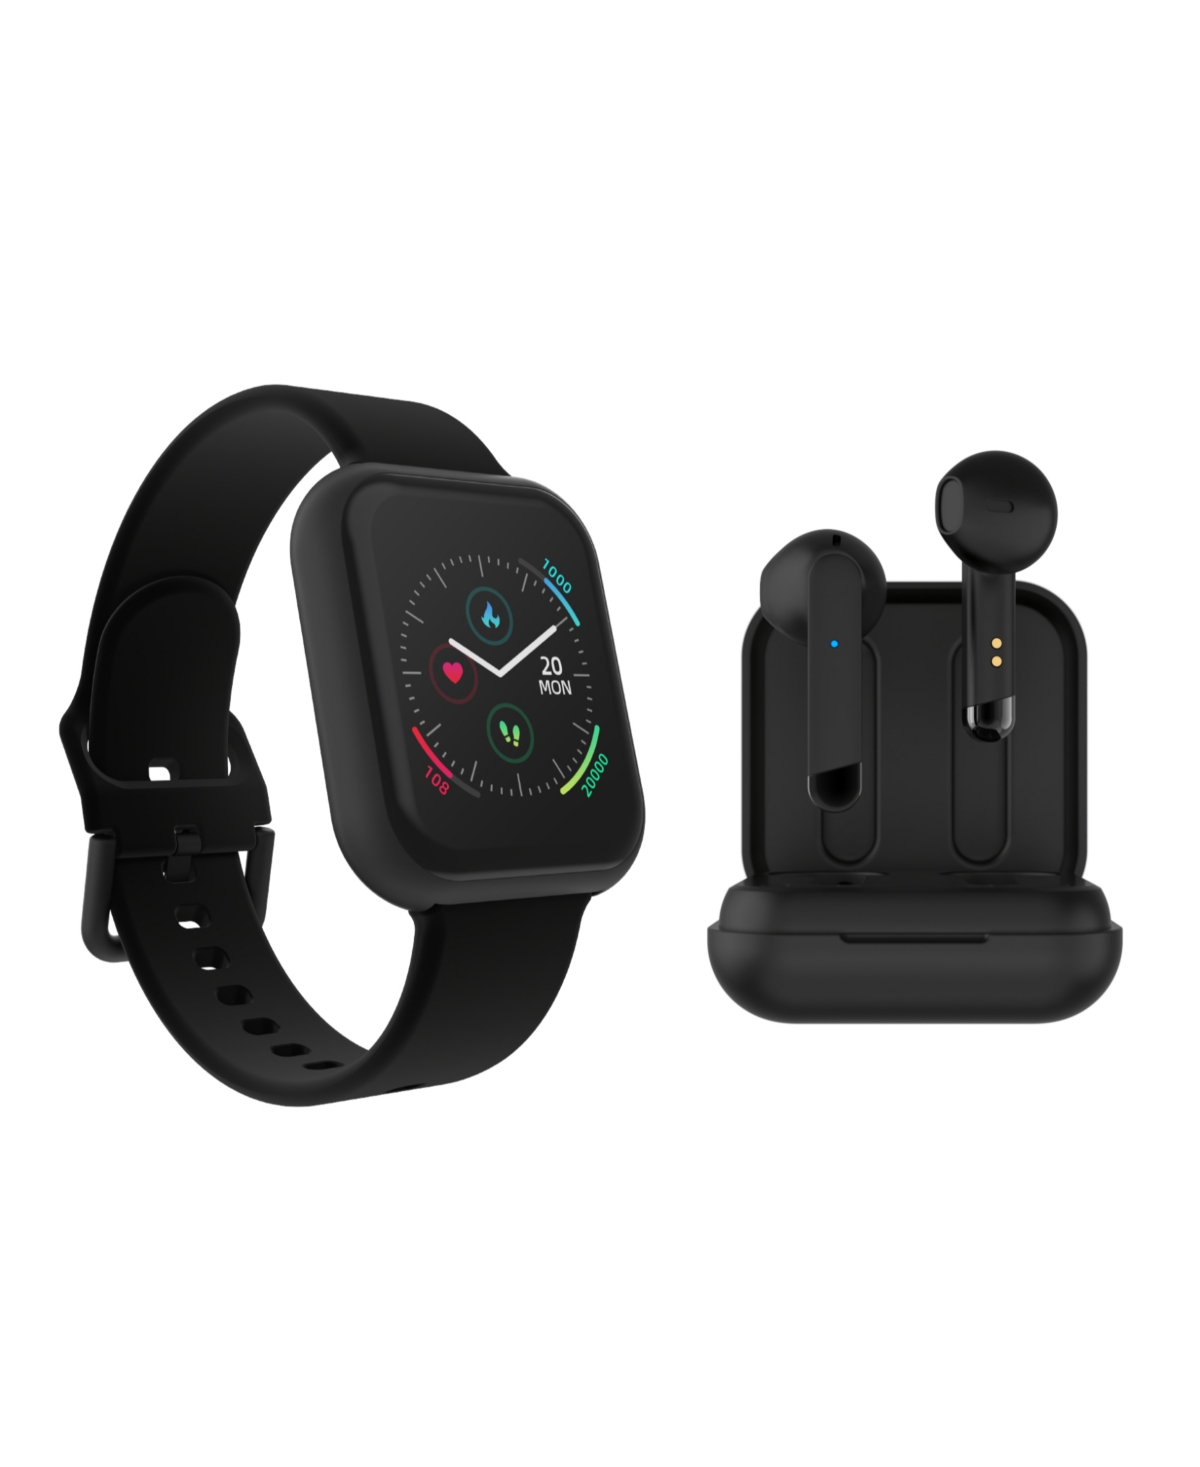 Air 3 Unisex Black Silicone Strap Smartwatch 44mm with Black Amp Plus Wireless Earbuds Bundle - Black